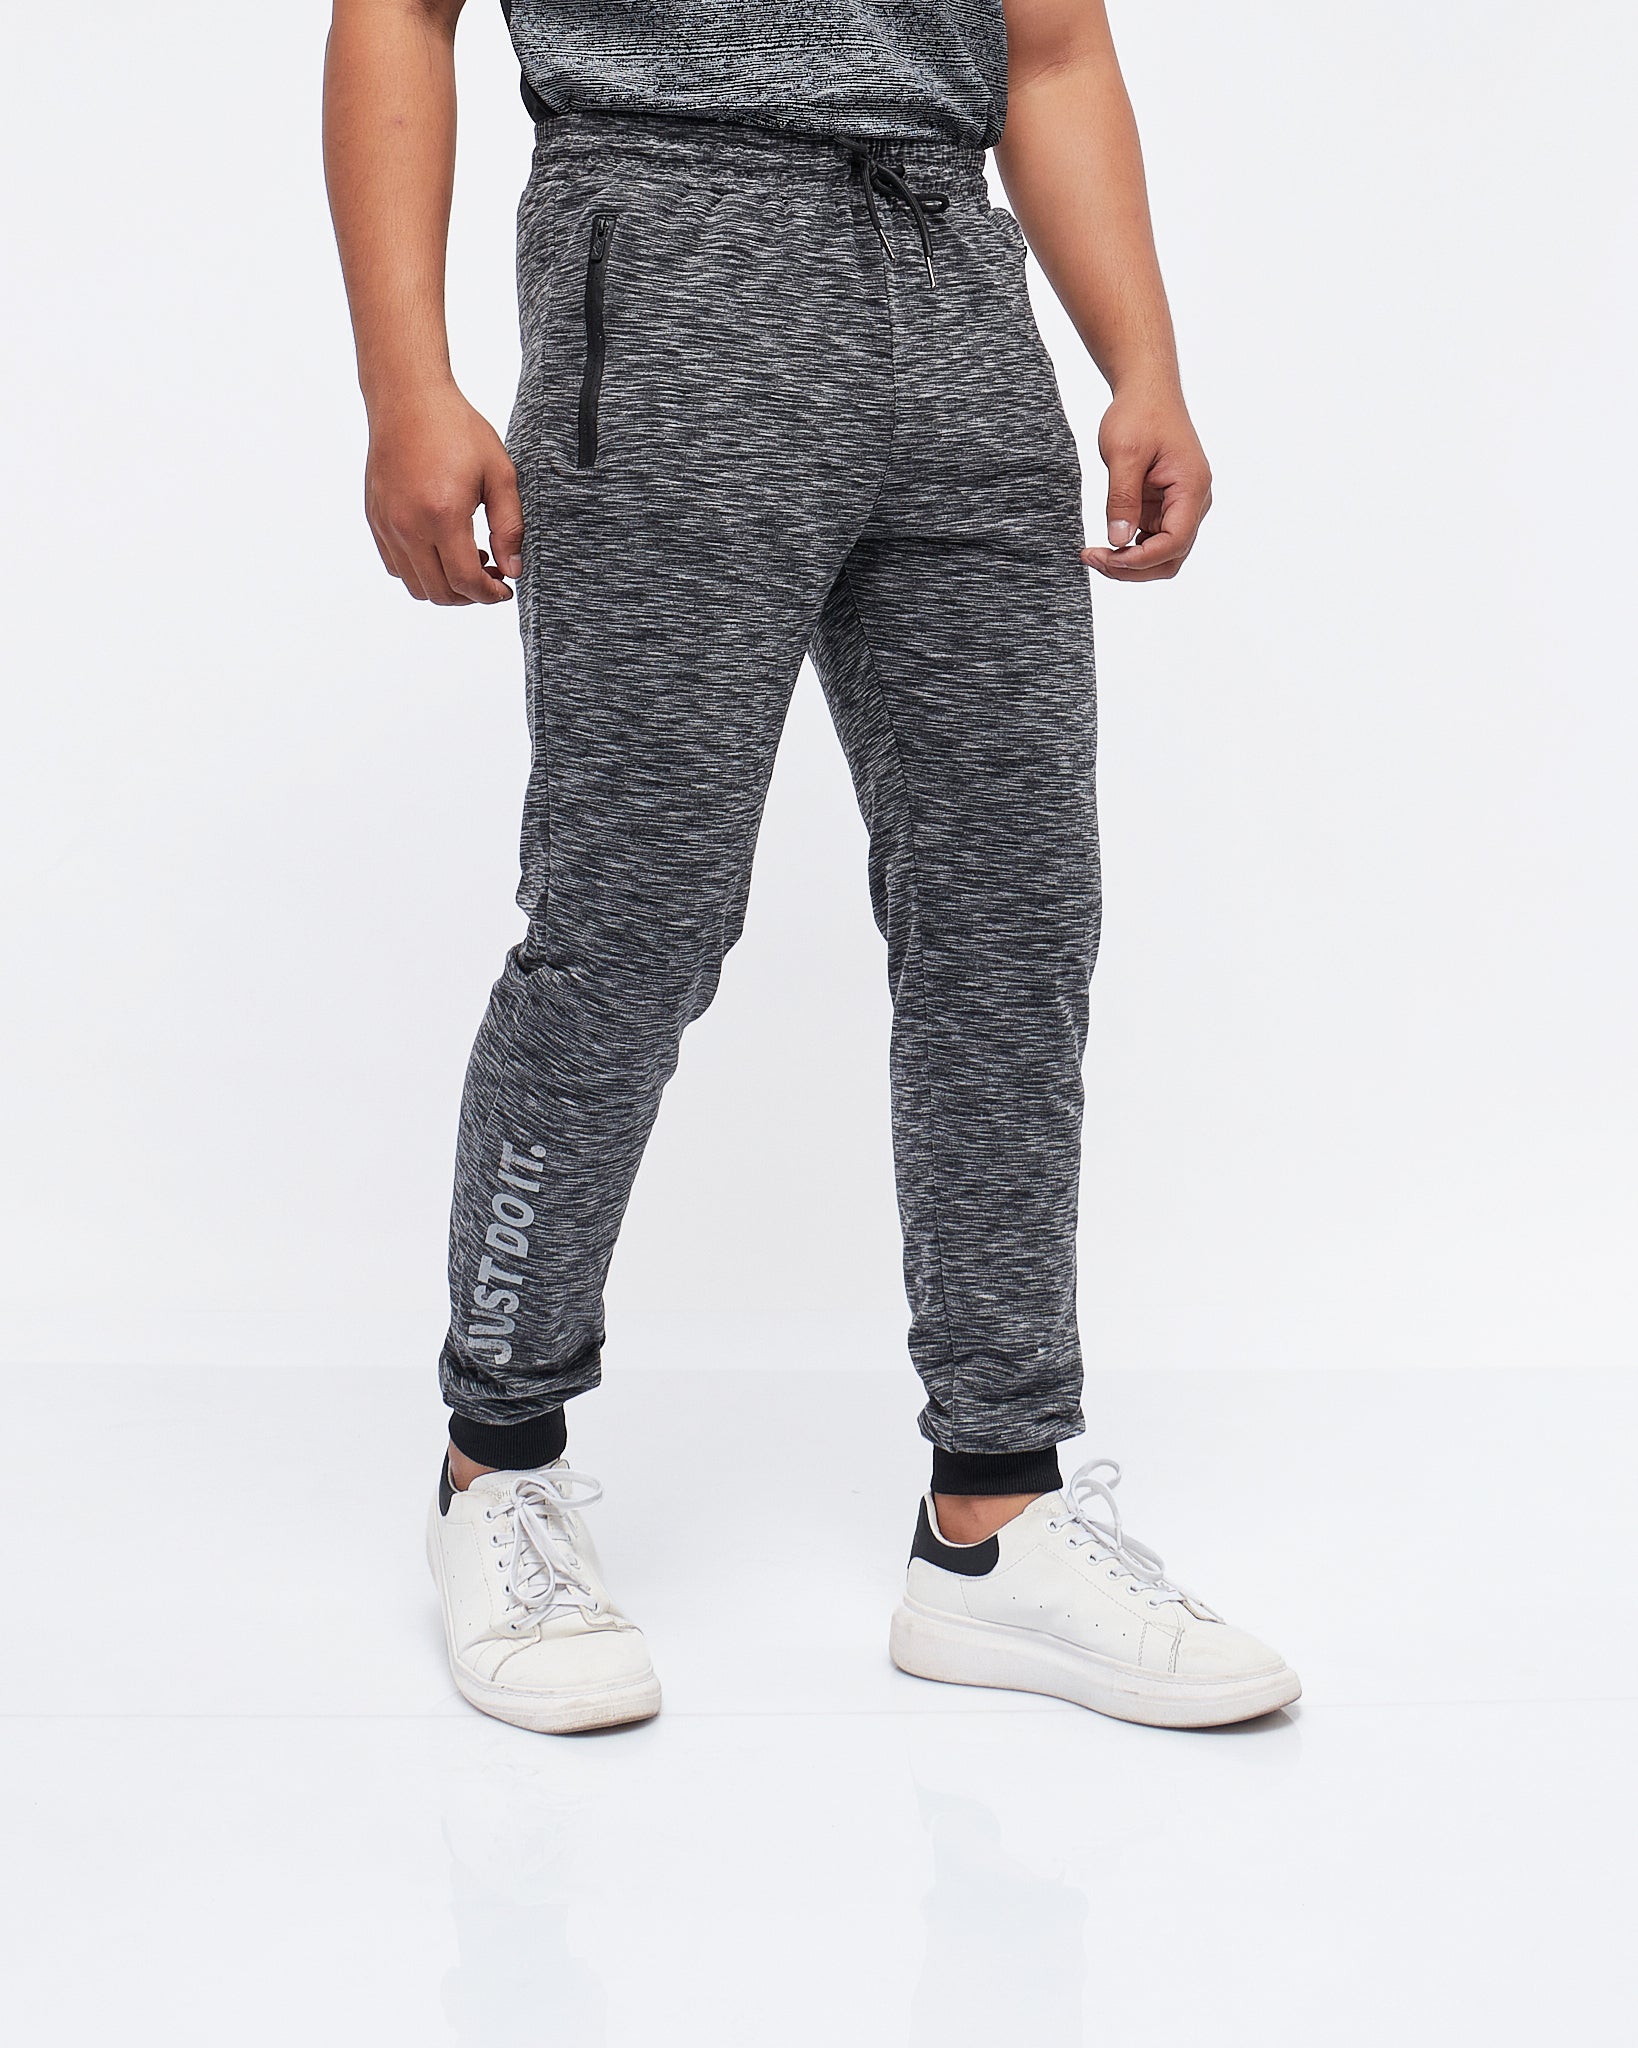 Buy Grey Track Pants for Men by ARROW Online | Ajio.com